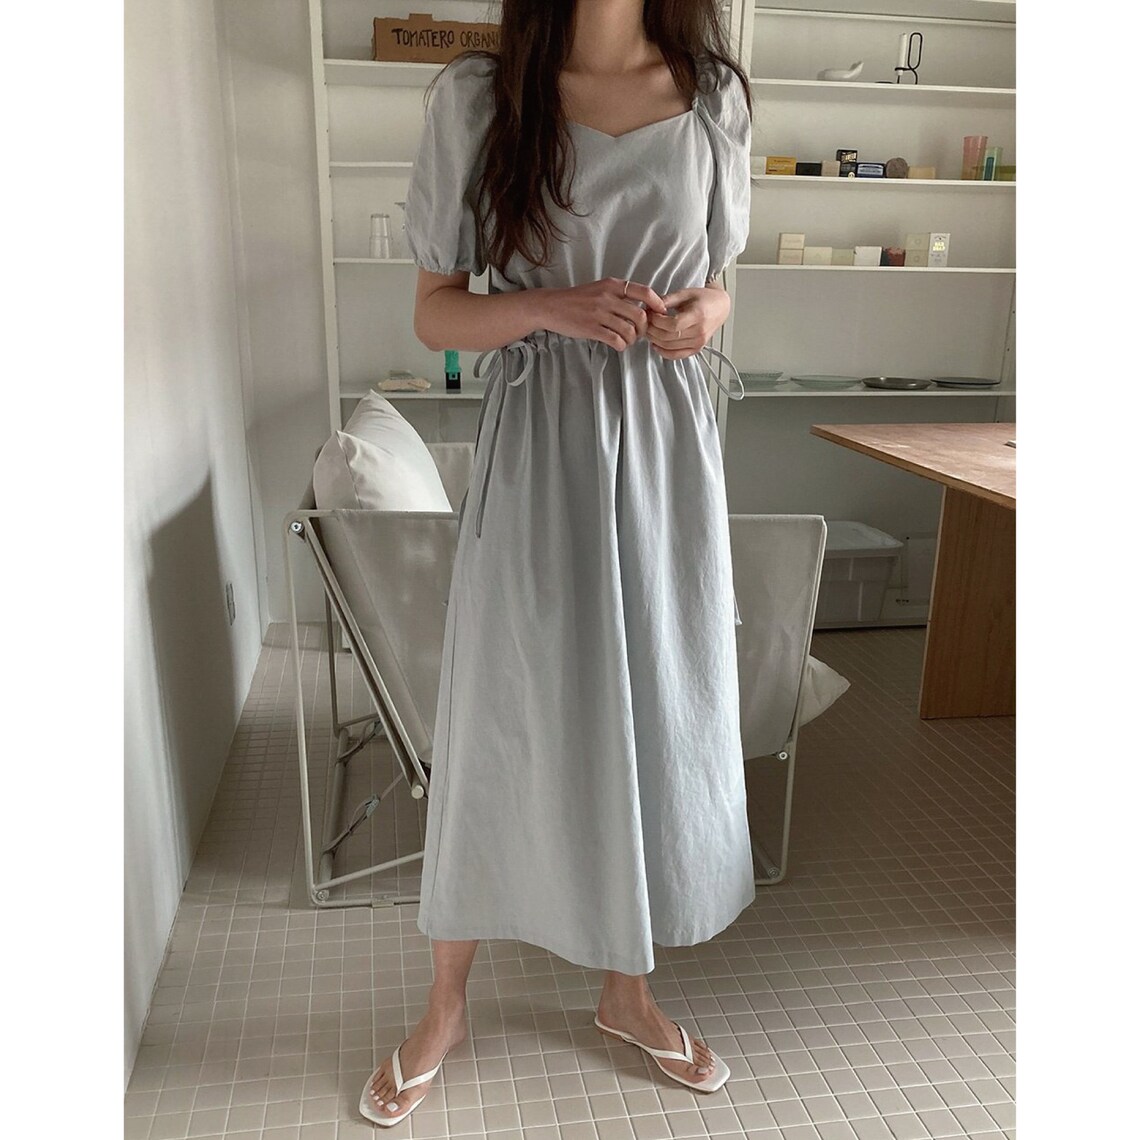 Linen dress / Puff sleeve dress / Square neck dress / Romantic | Etsy